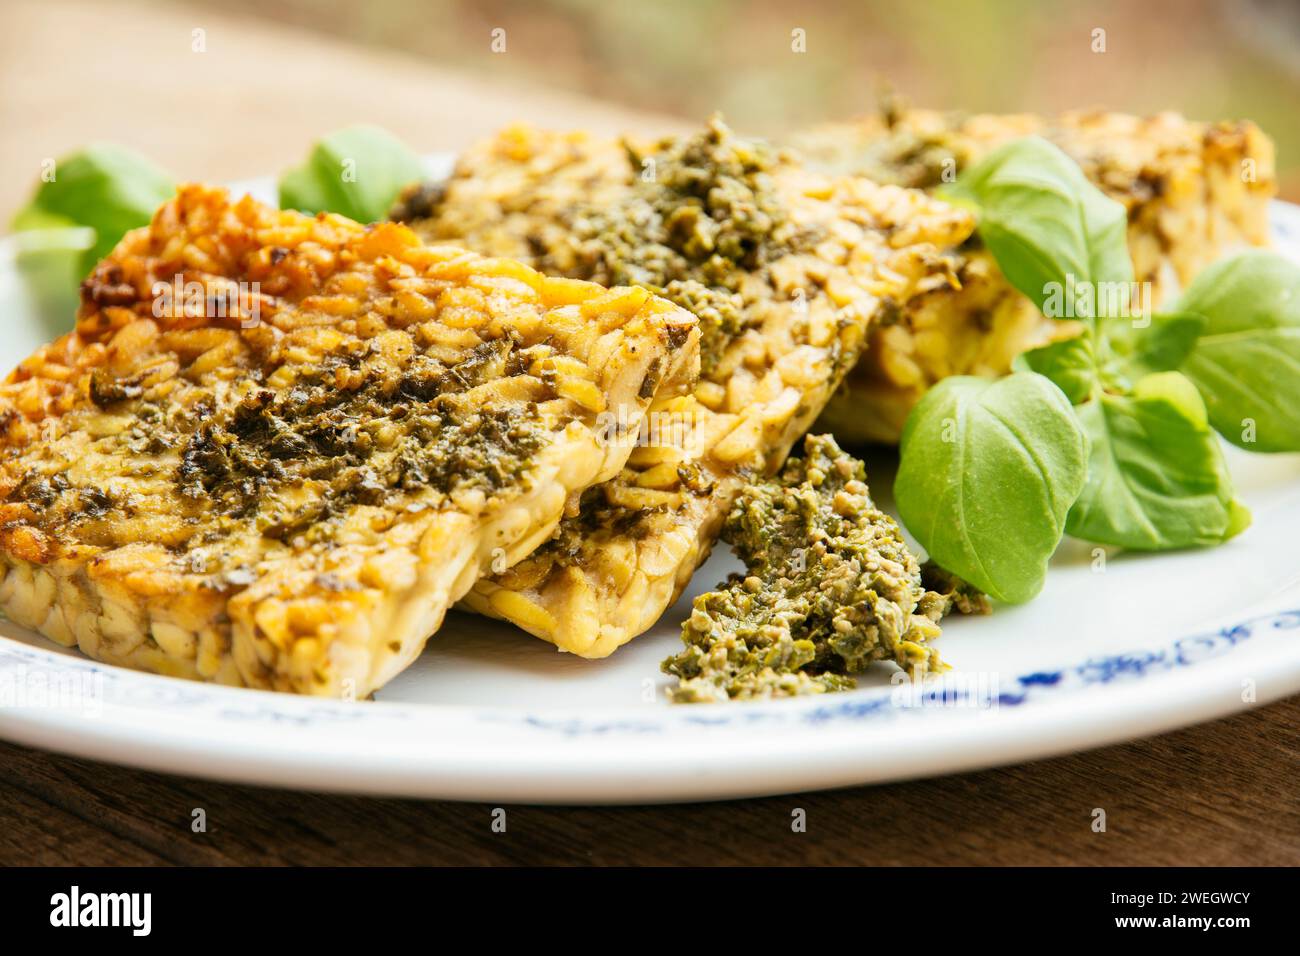 Slices of fried tempeh with a vegan arugula pesto. Stock Photo